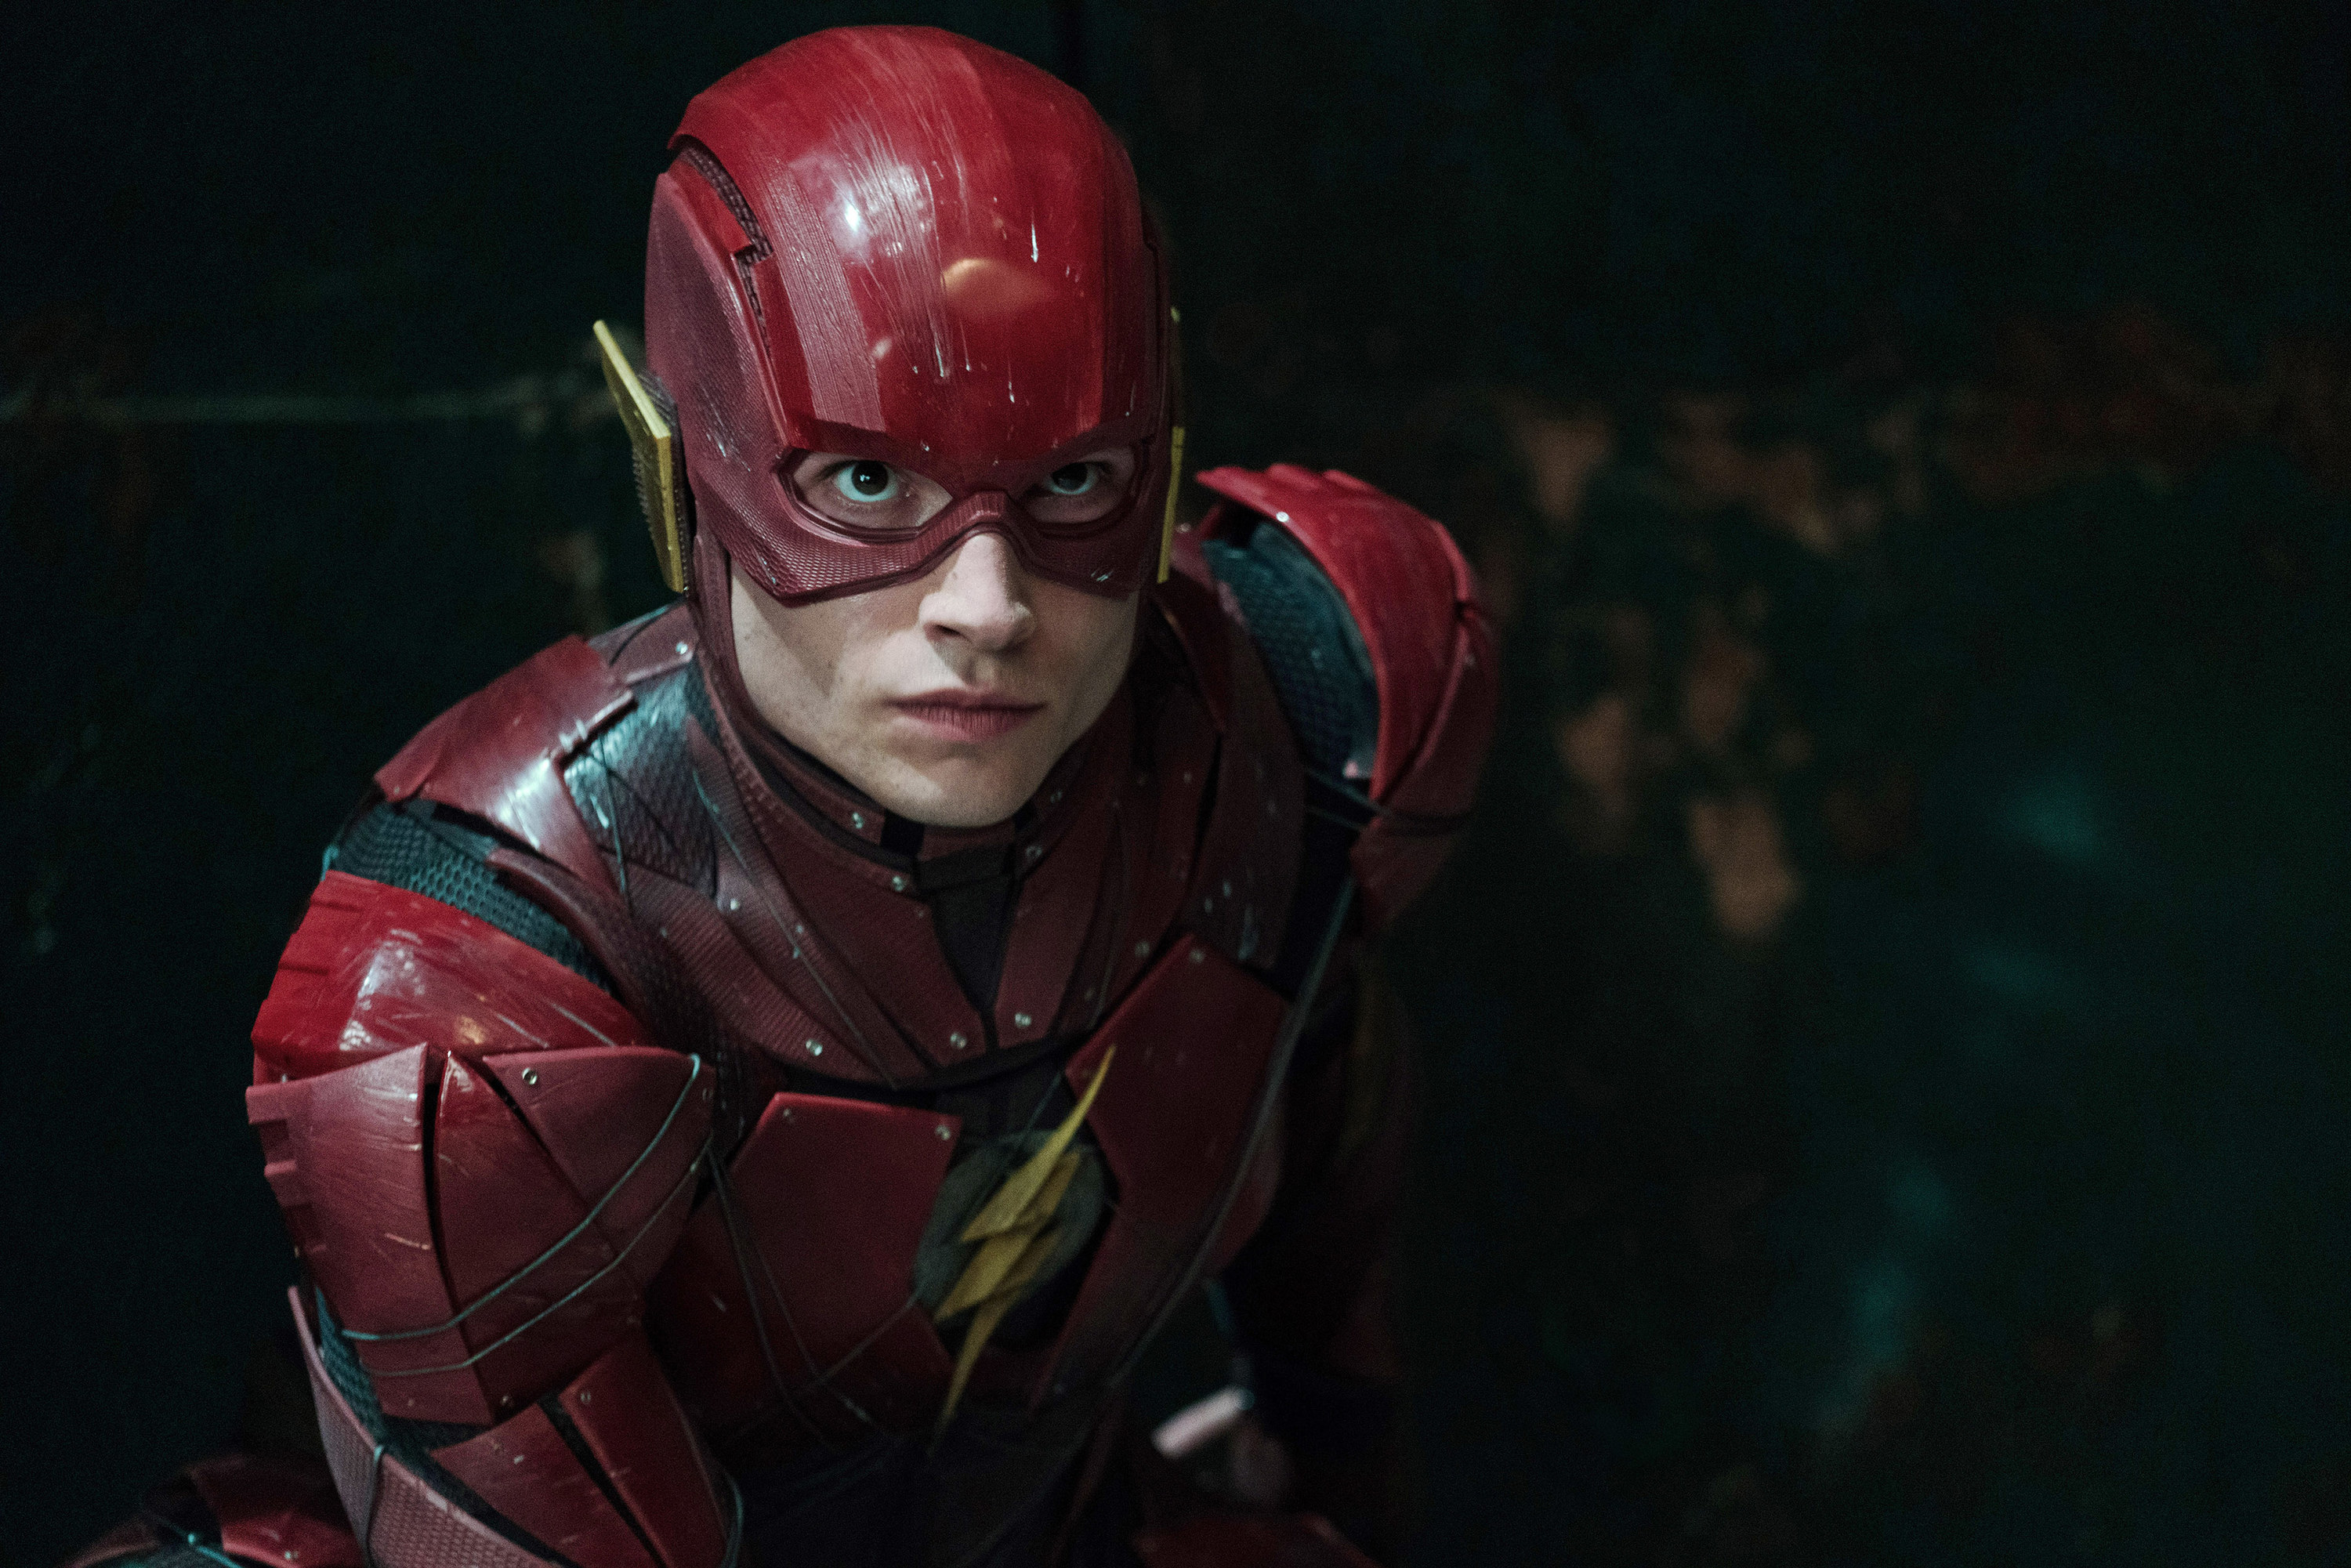 Ezra in The Flash costume